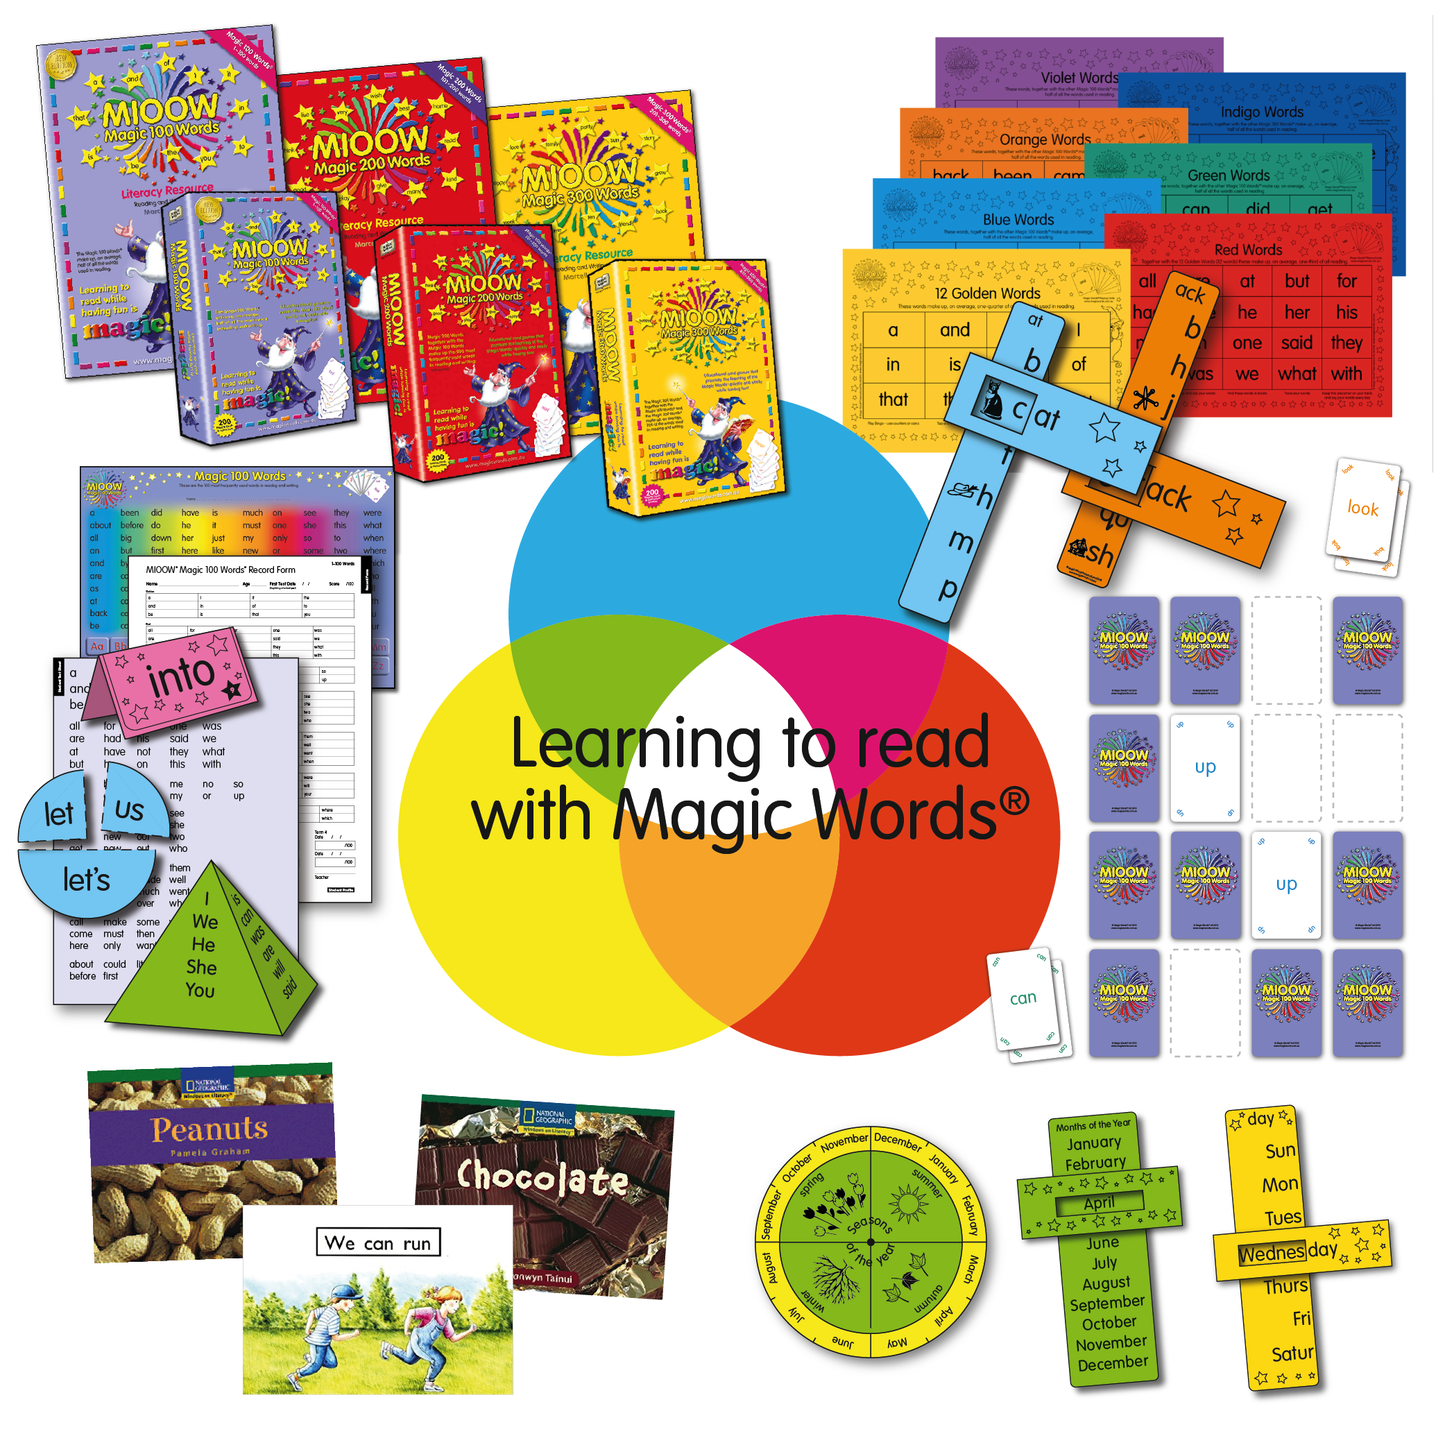 Magic 100 Words Literacy Resource Manual